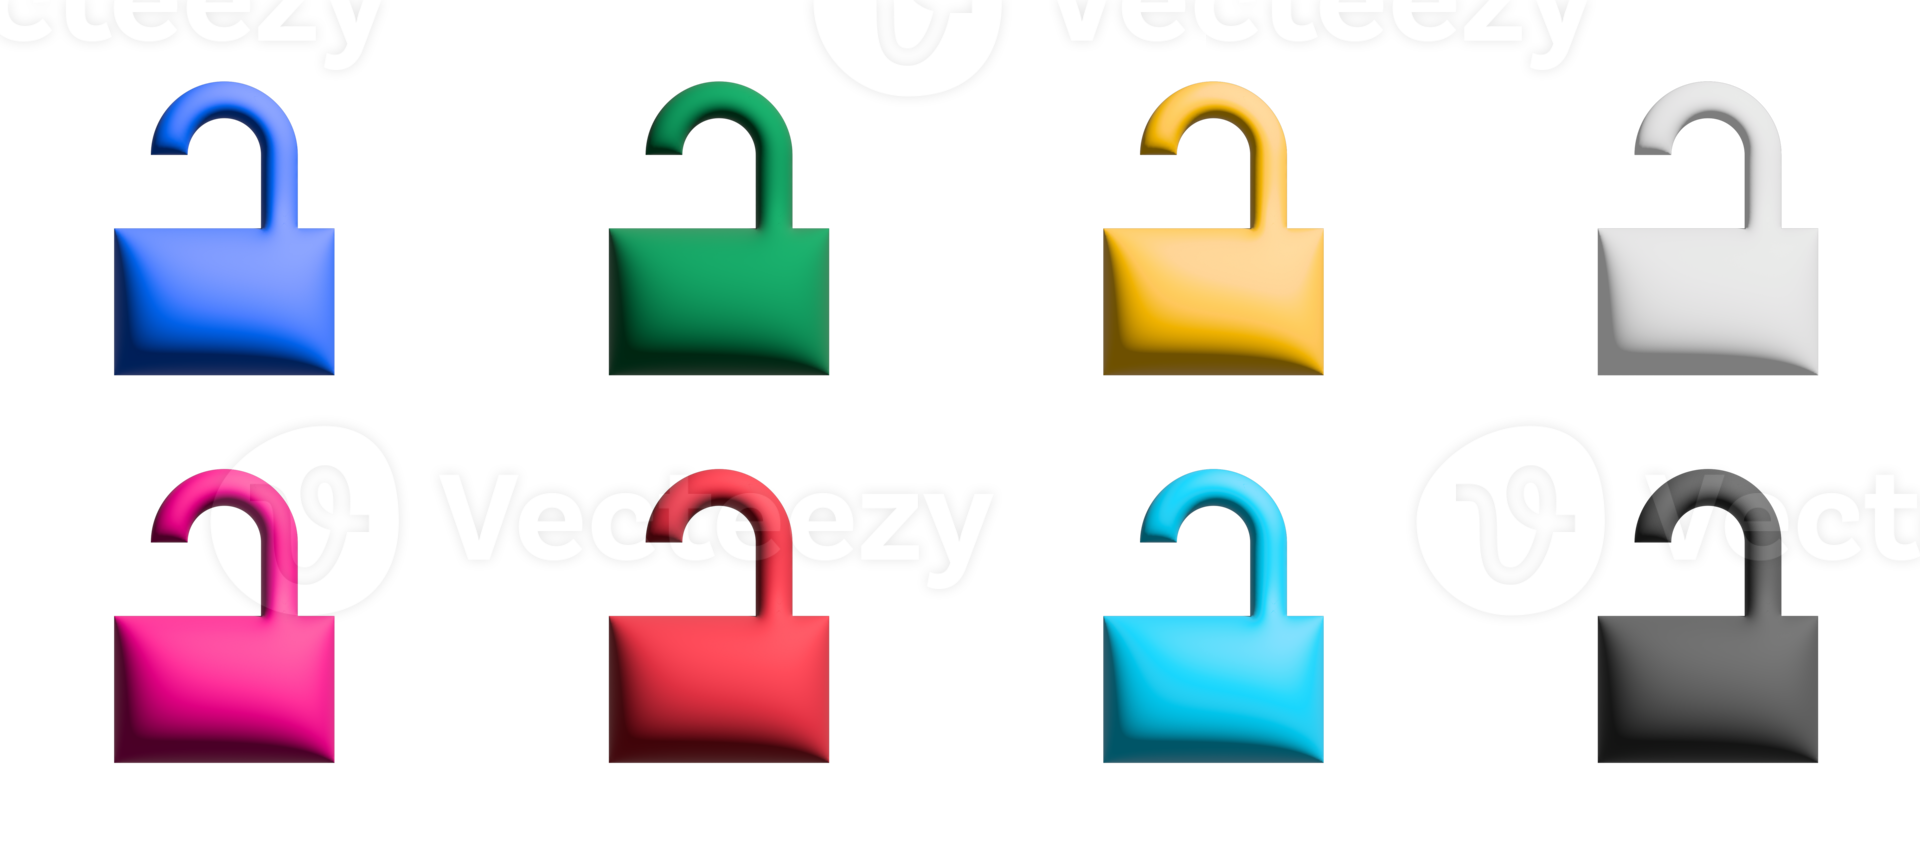 lock unlocked icon set, colored symbols graphic elements png